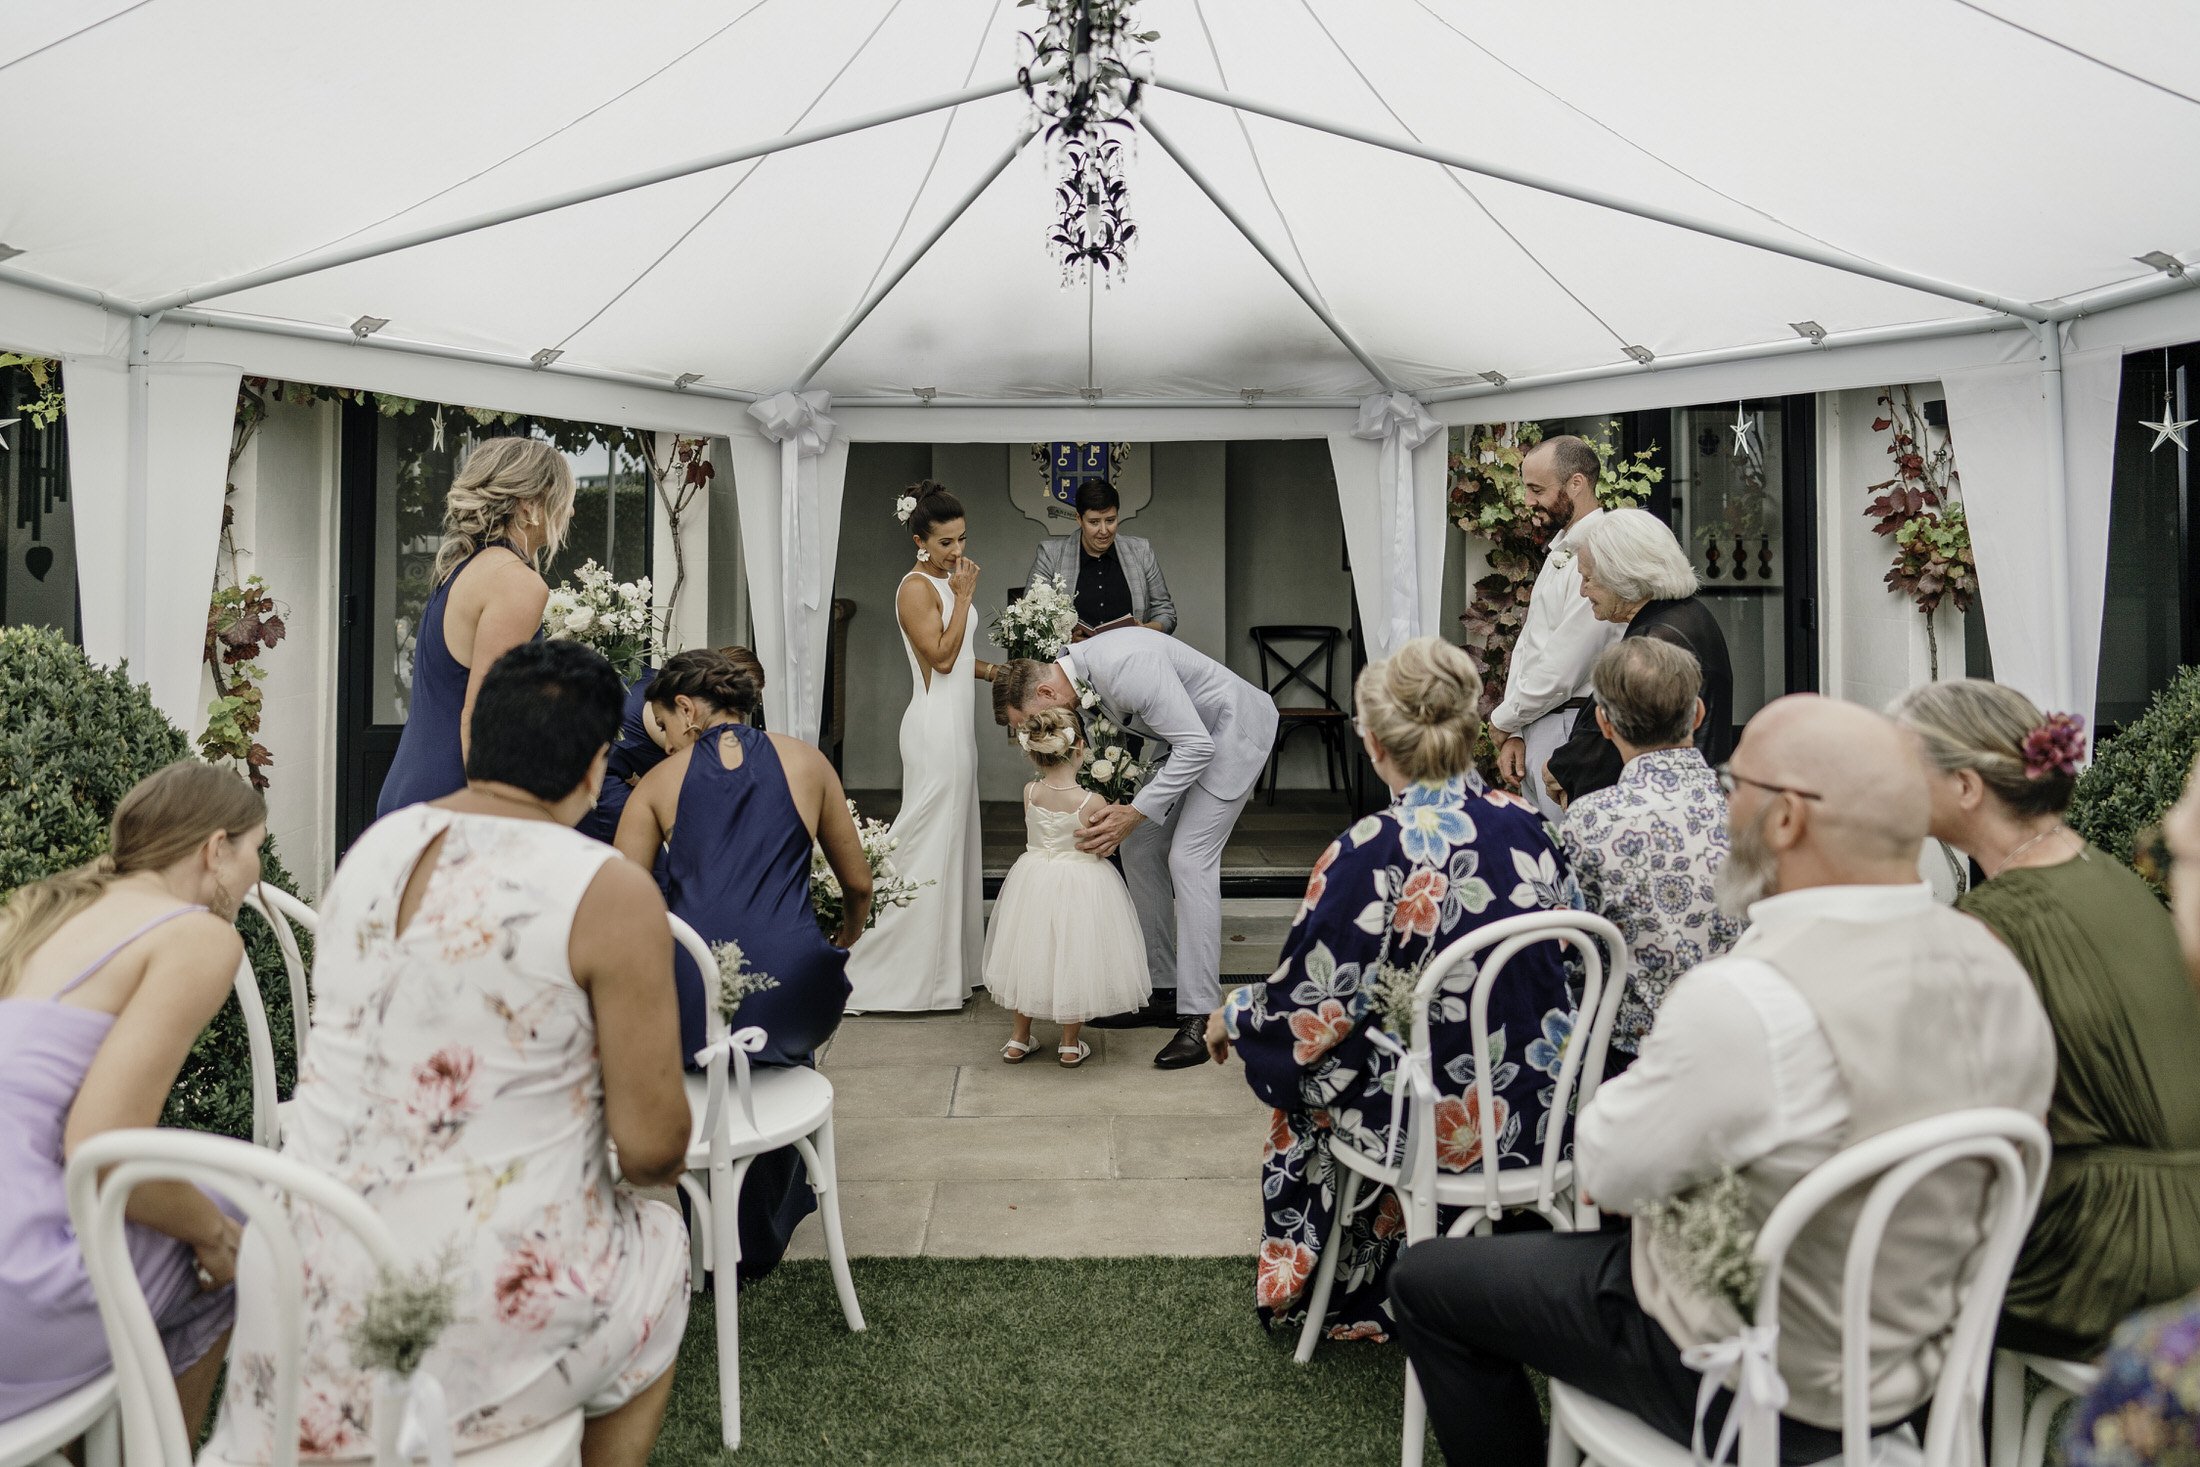 Auckland Wedding Photographer | Auckland Wedding Videographer | CBD Remuera Wedding Venue | Pax Remuera | Auckland Venue | Auckland Photographer